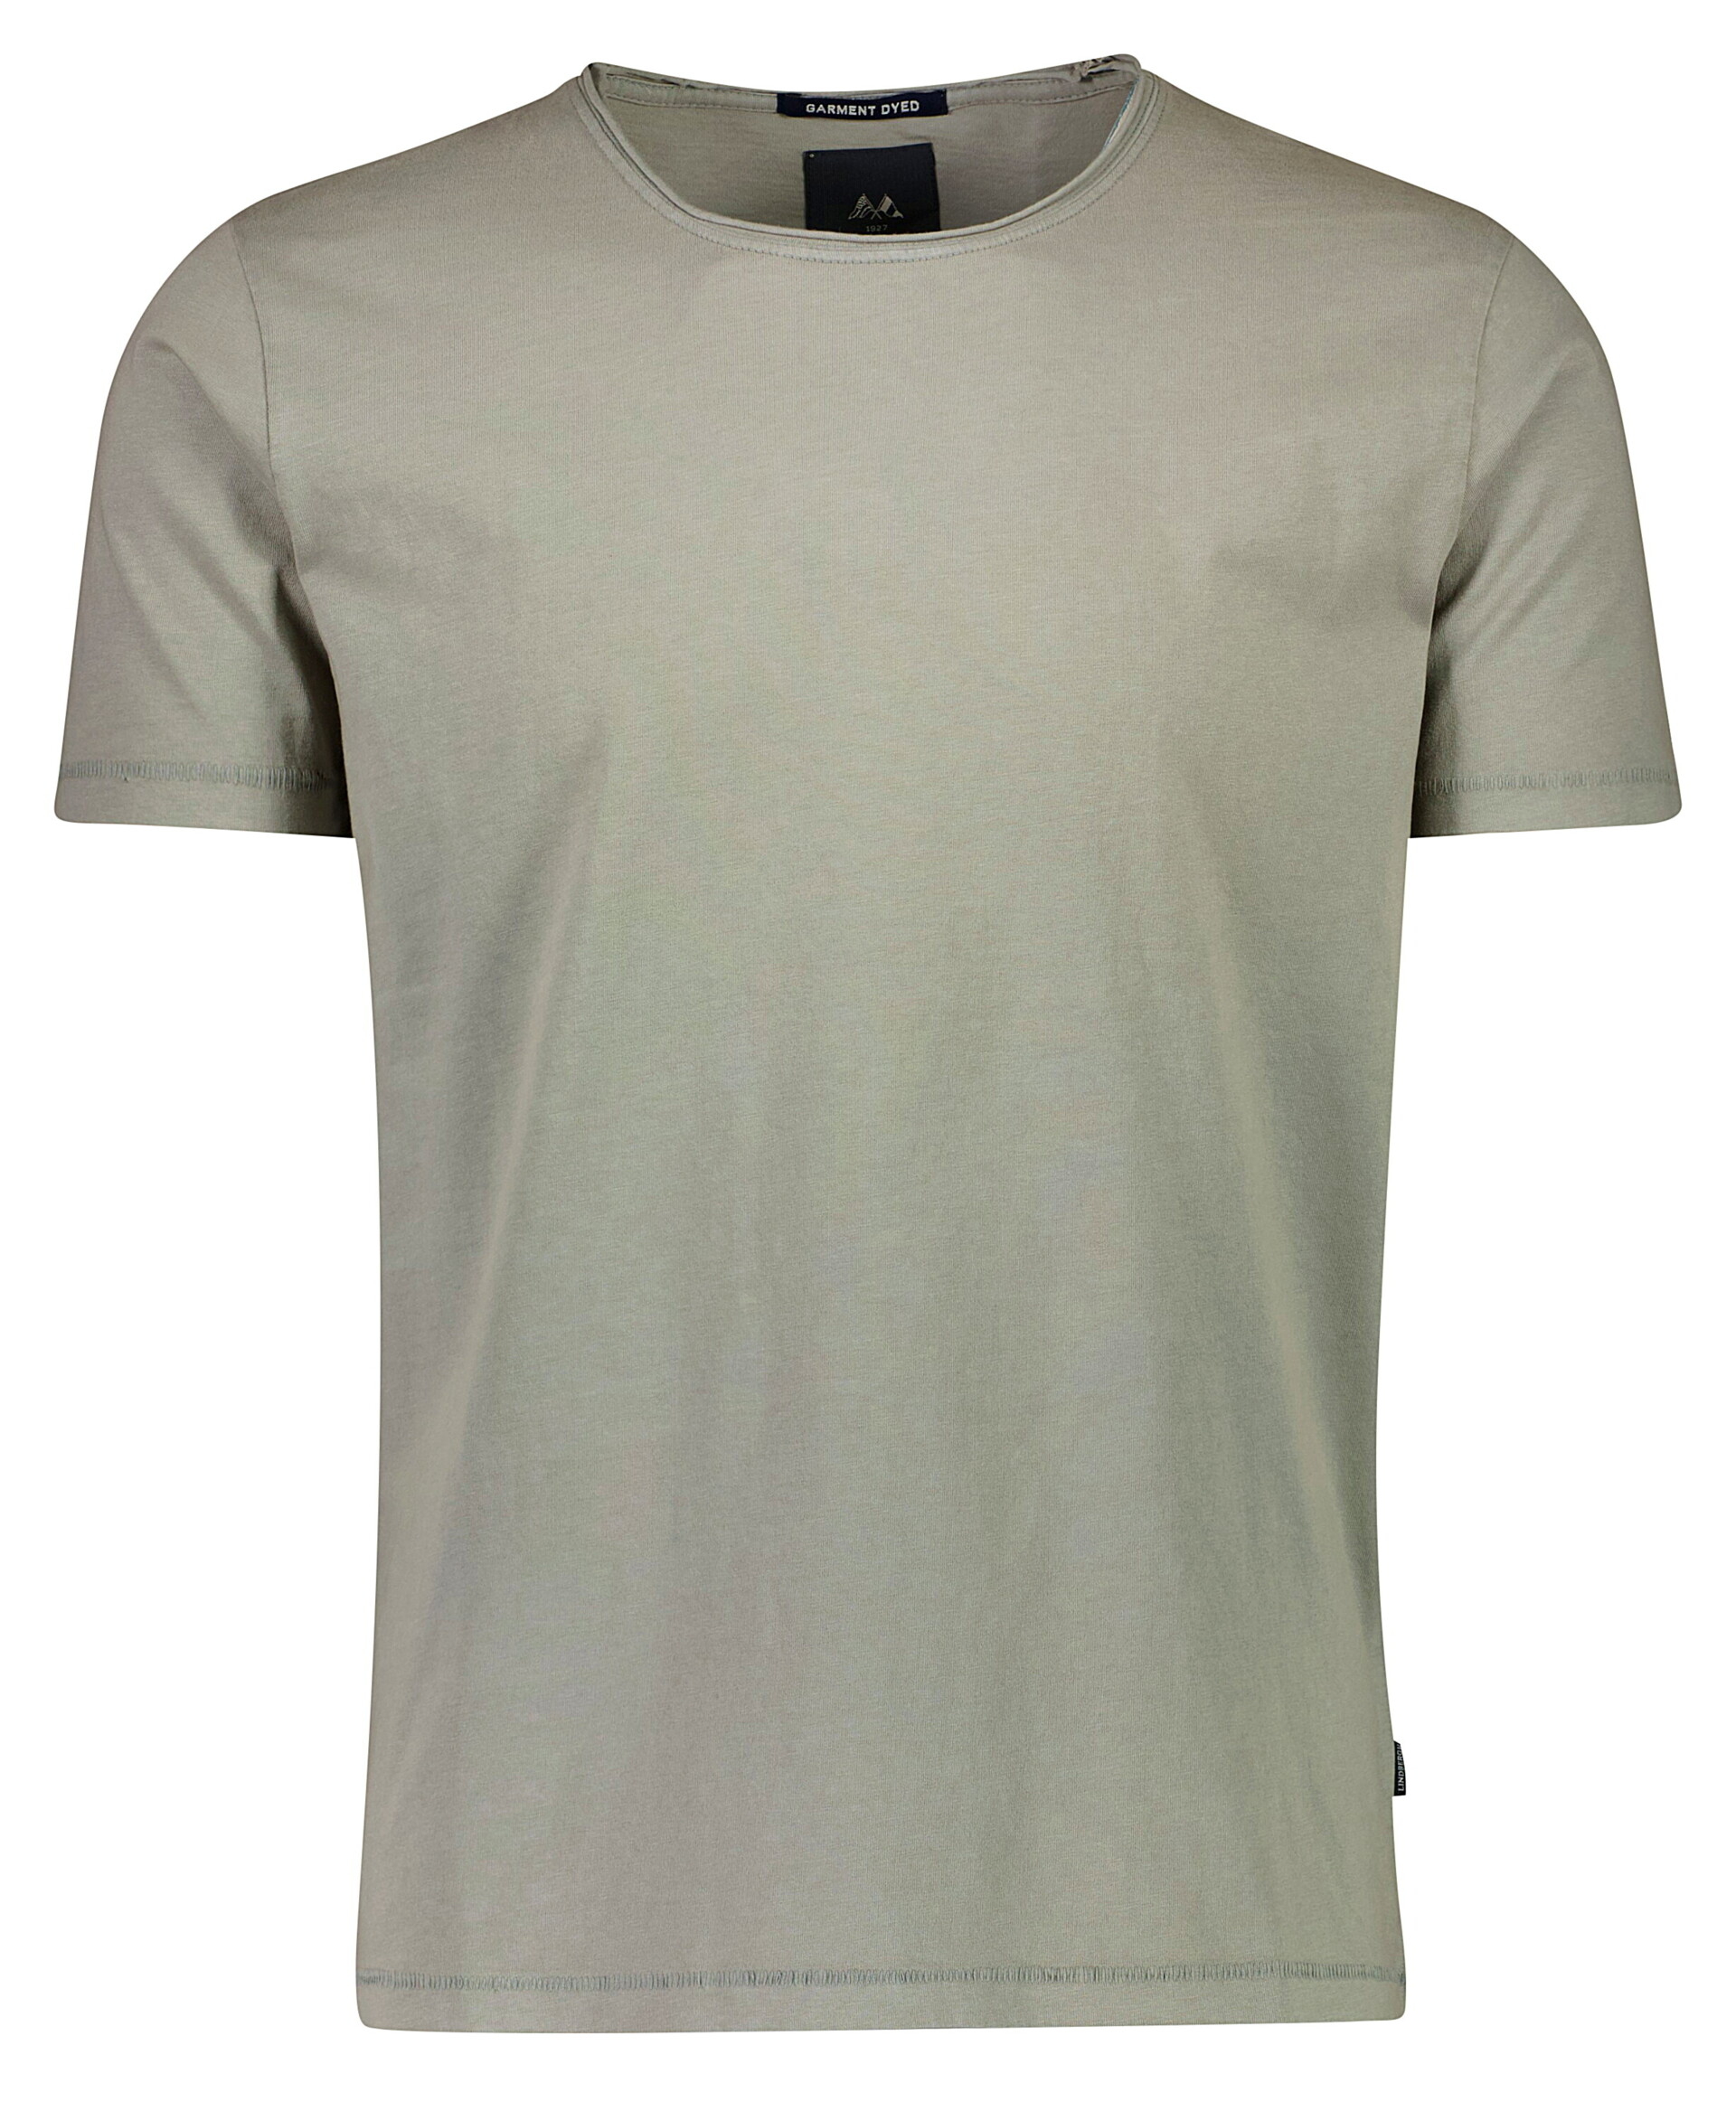 Lindbergh T-shirt grau / grey